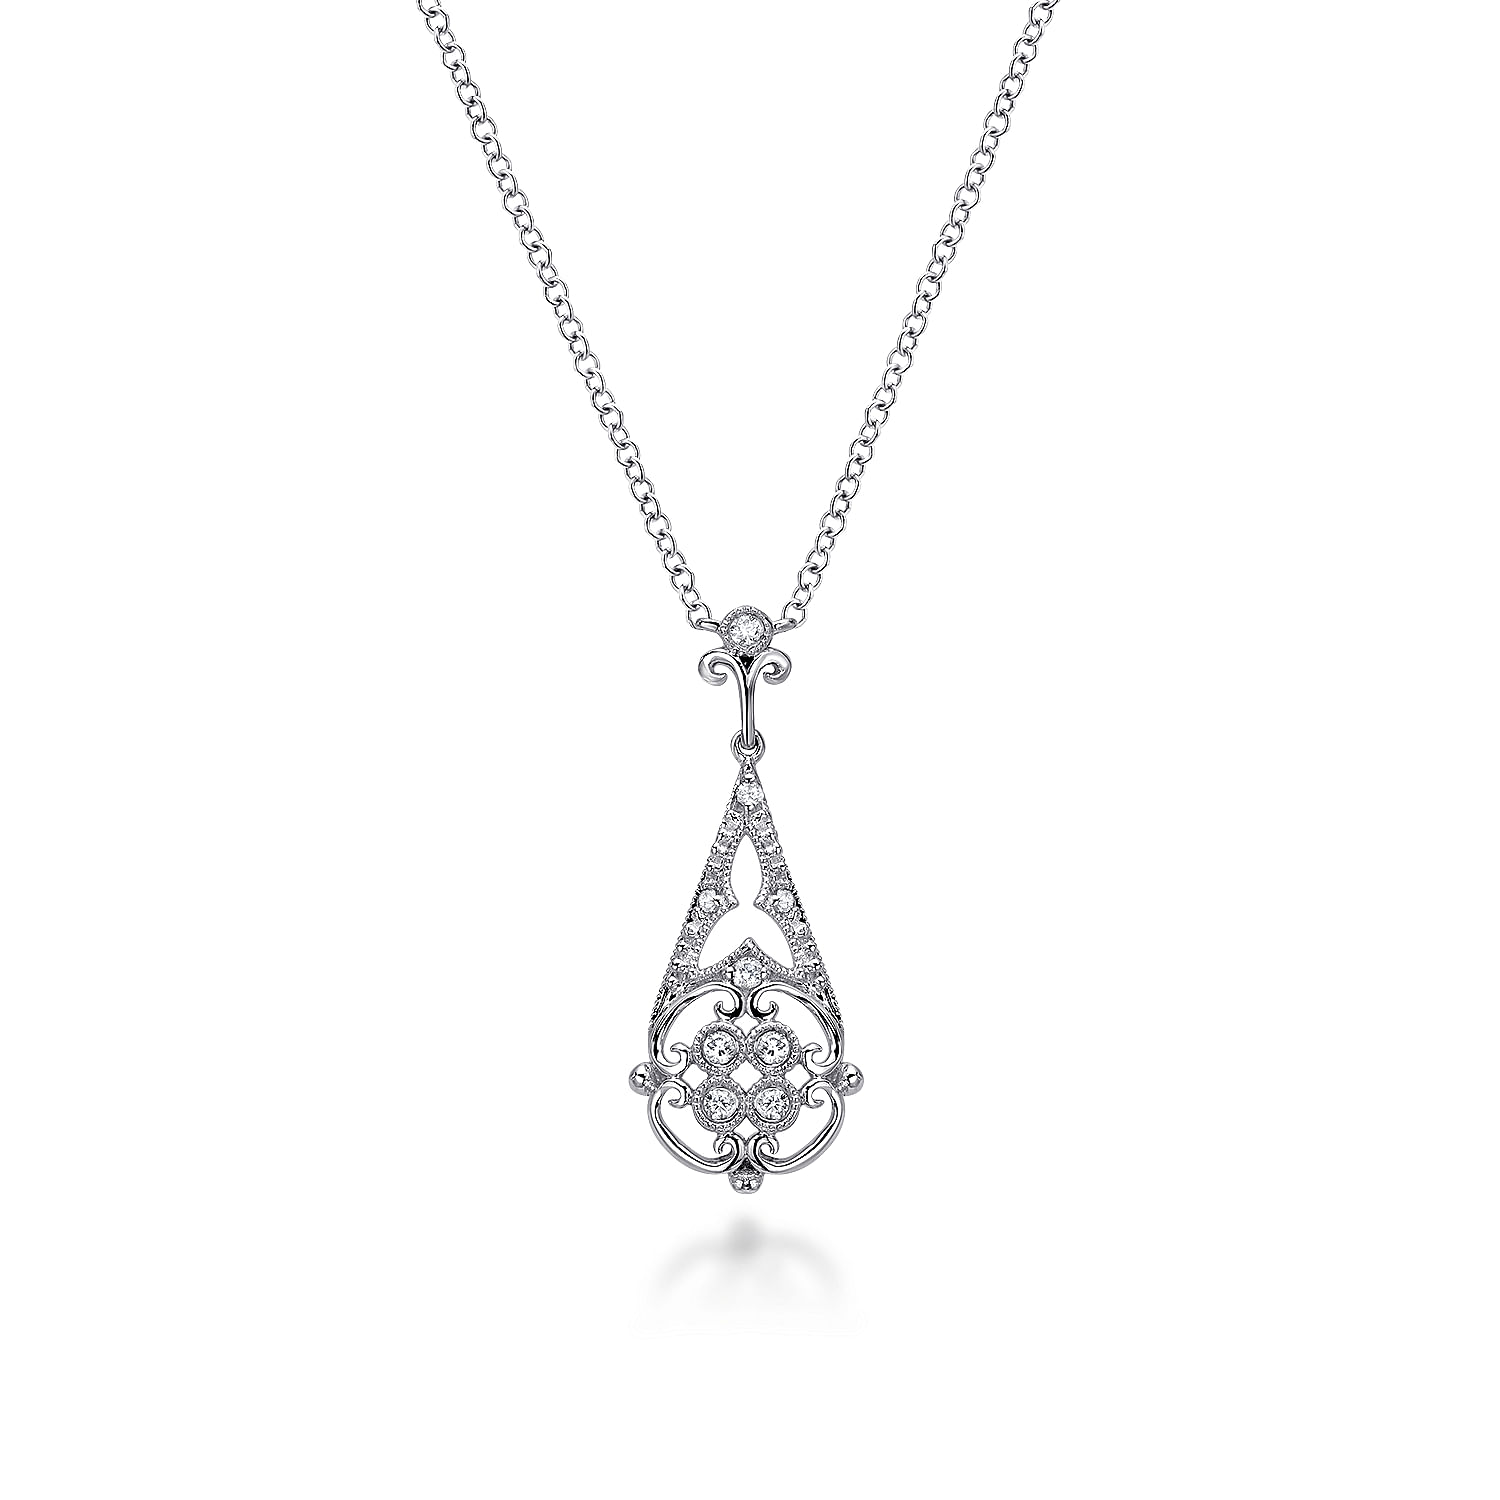 Gabriel - Vintage Inspired 14K White Gold Diamond Teardrop Pendant Necklace